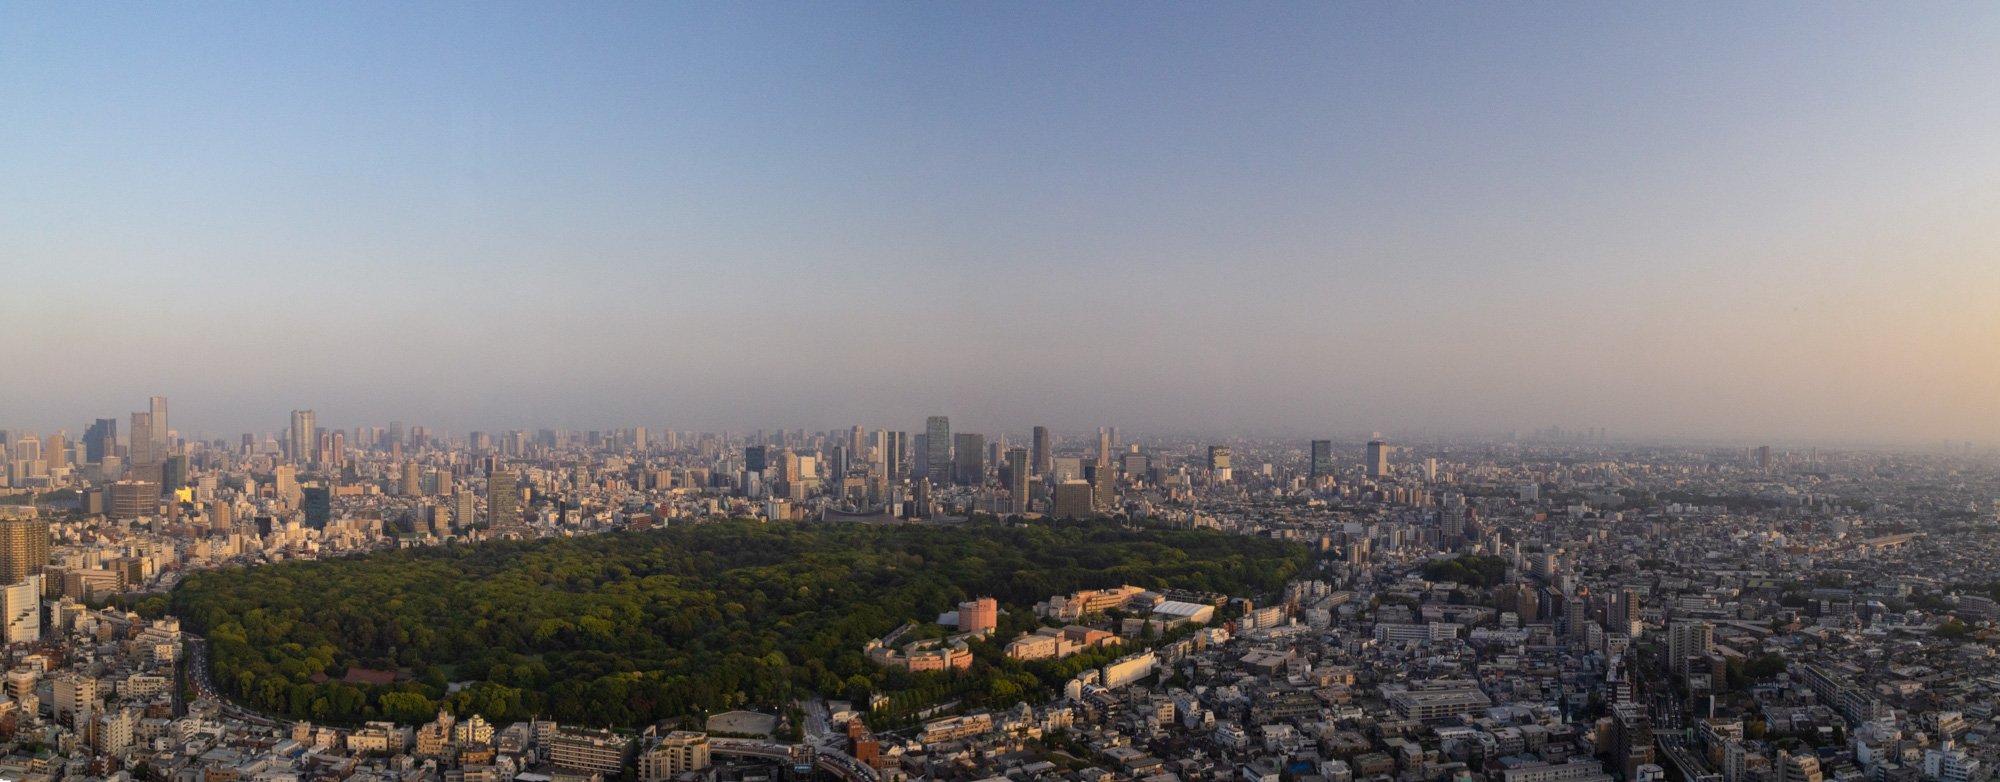 Tokyo_Panorama_Yoyogi_Park.jpeg